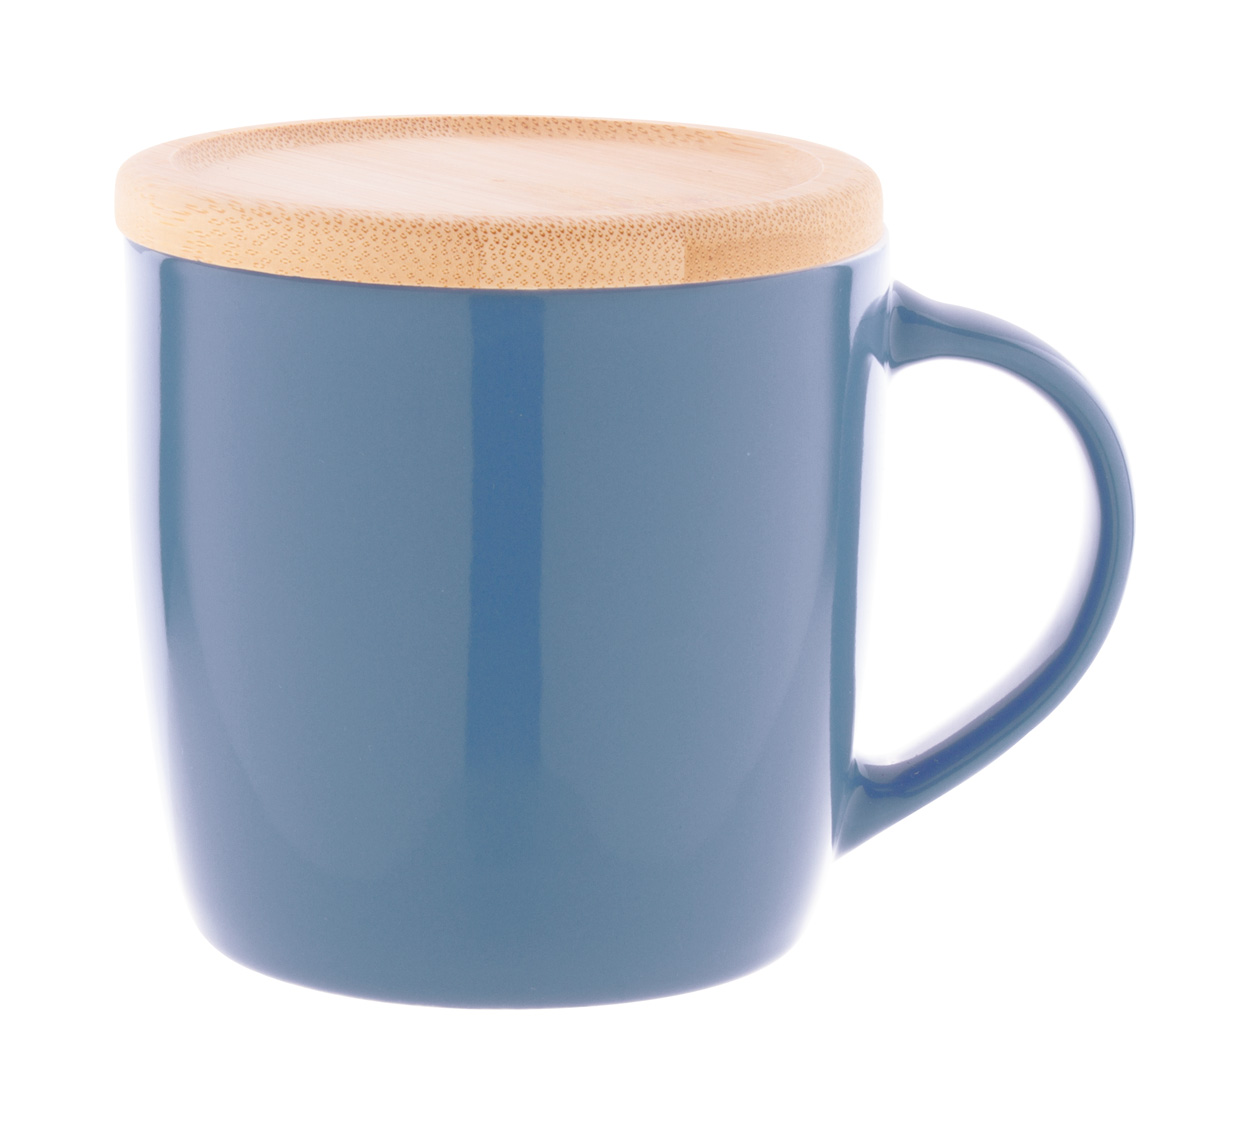 Hemera Plus mug - baby blue